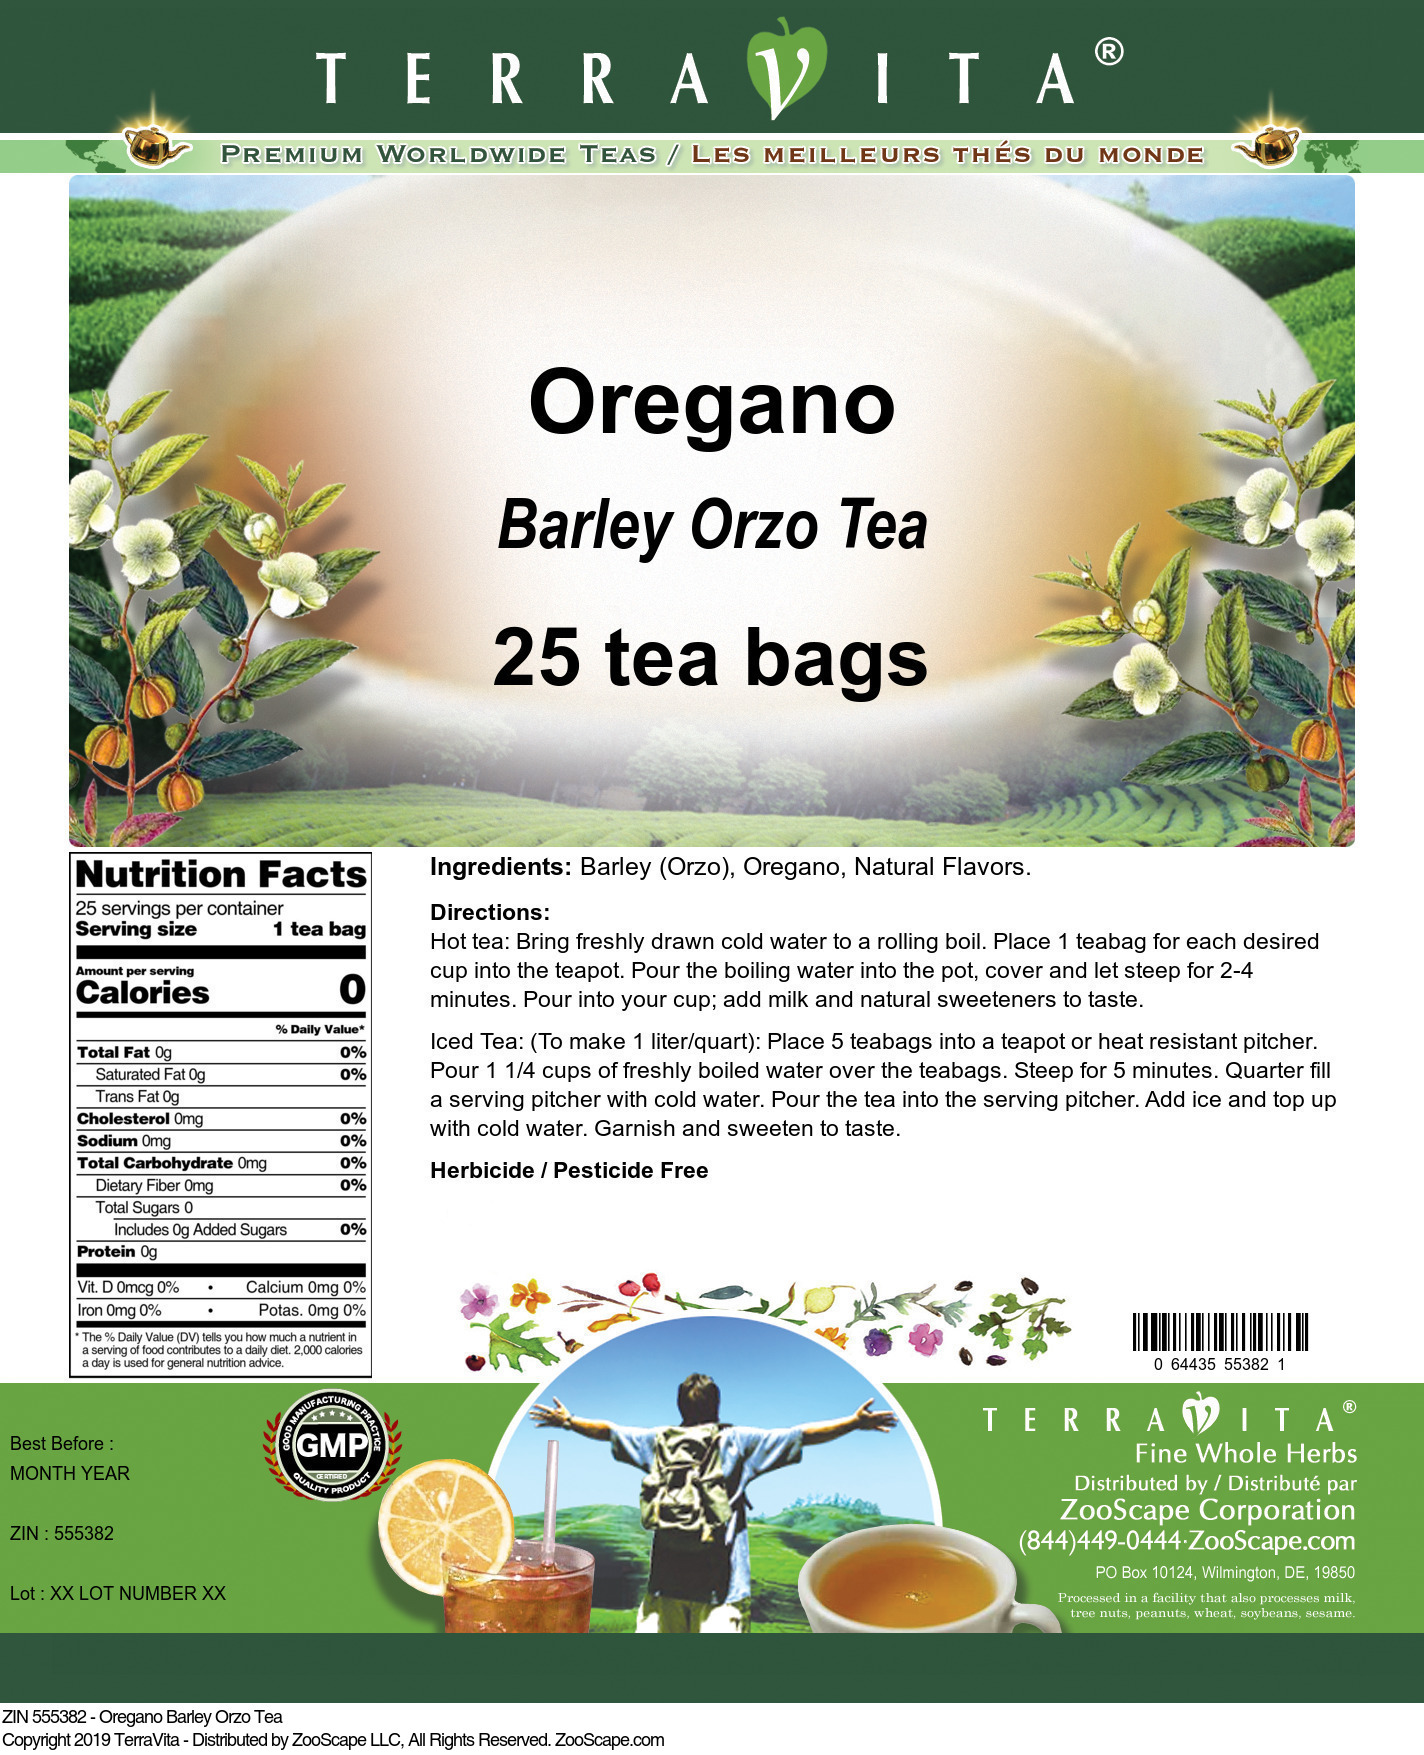 Oregano Barley Orzo Tea - Label